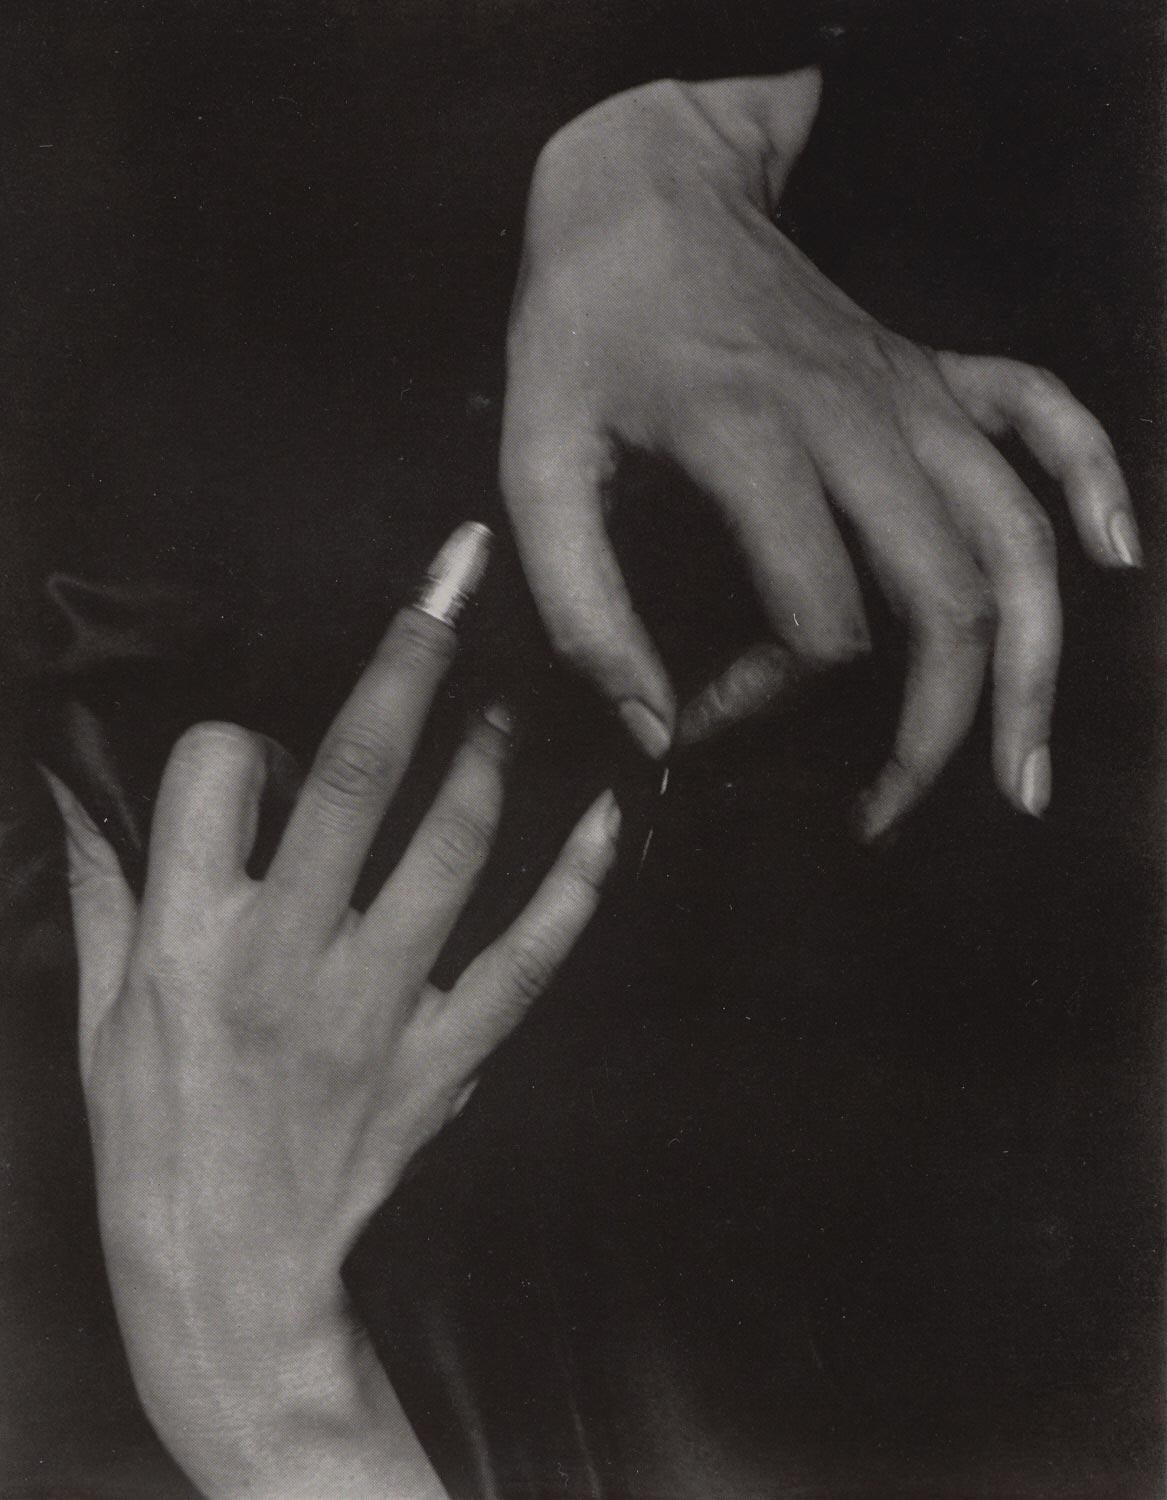 Stieglitz, O'Keeffe Hands w/Thimble, Alfred Stieglitz Memorial Portfolio (after)